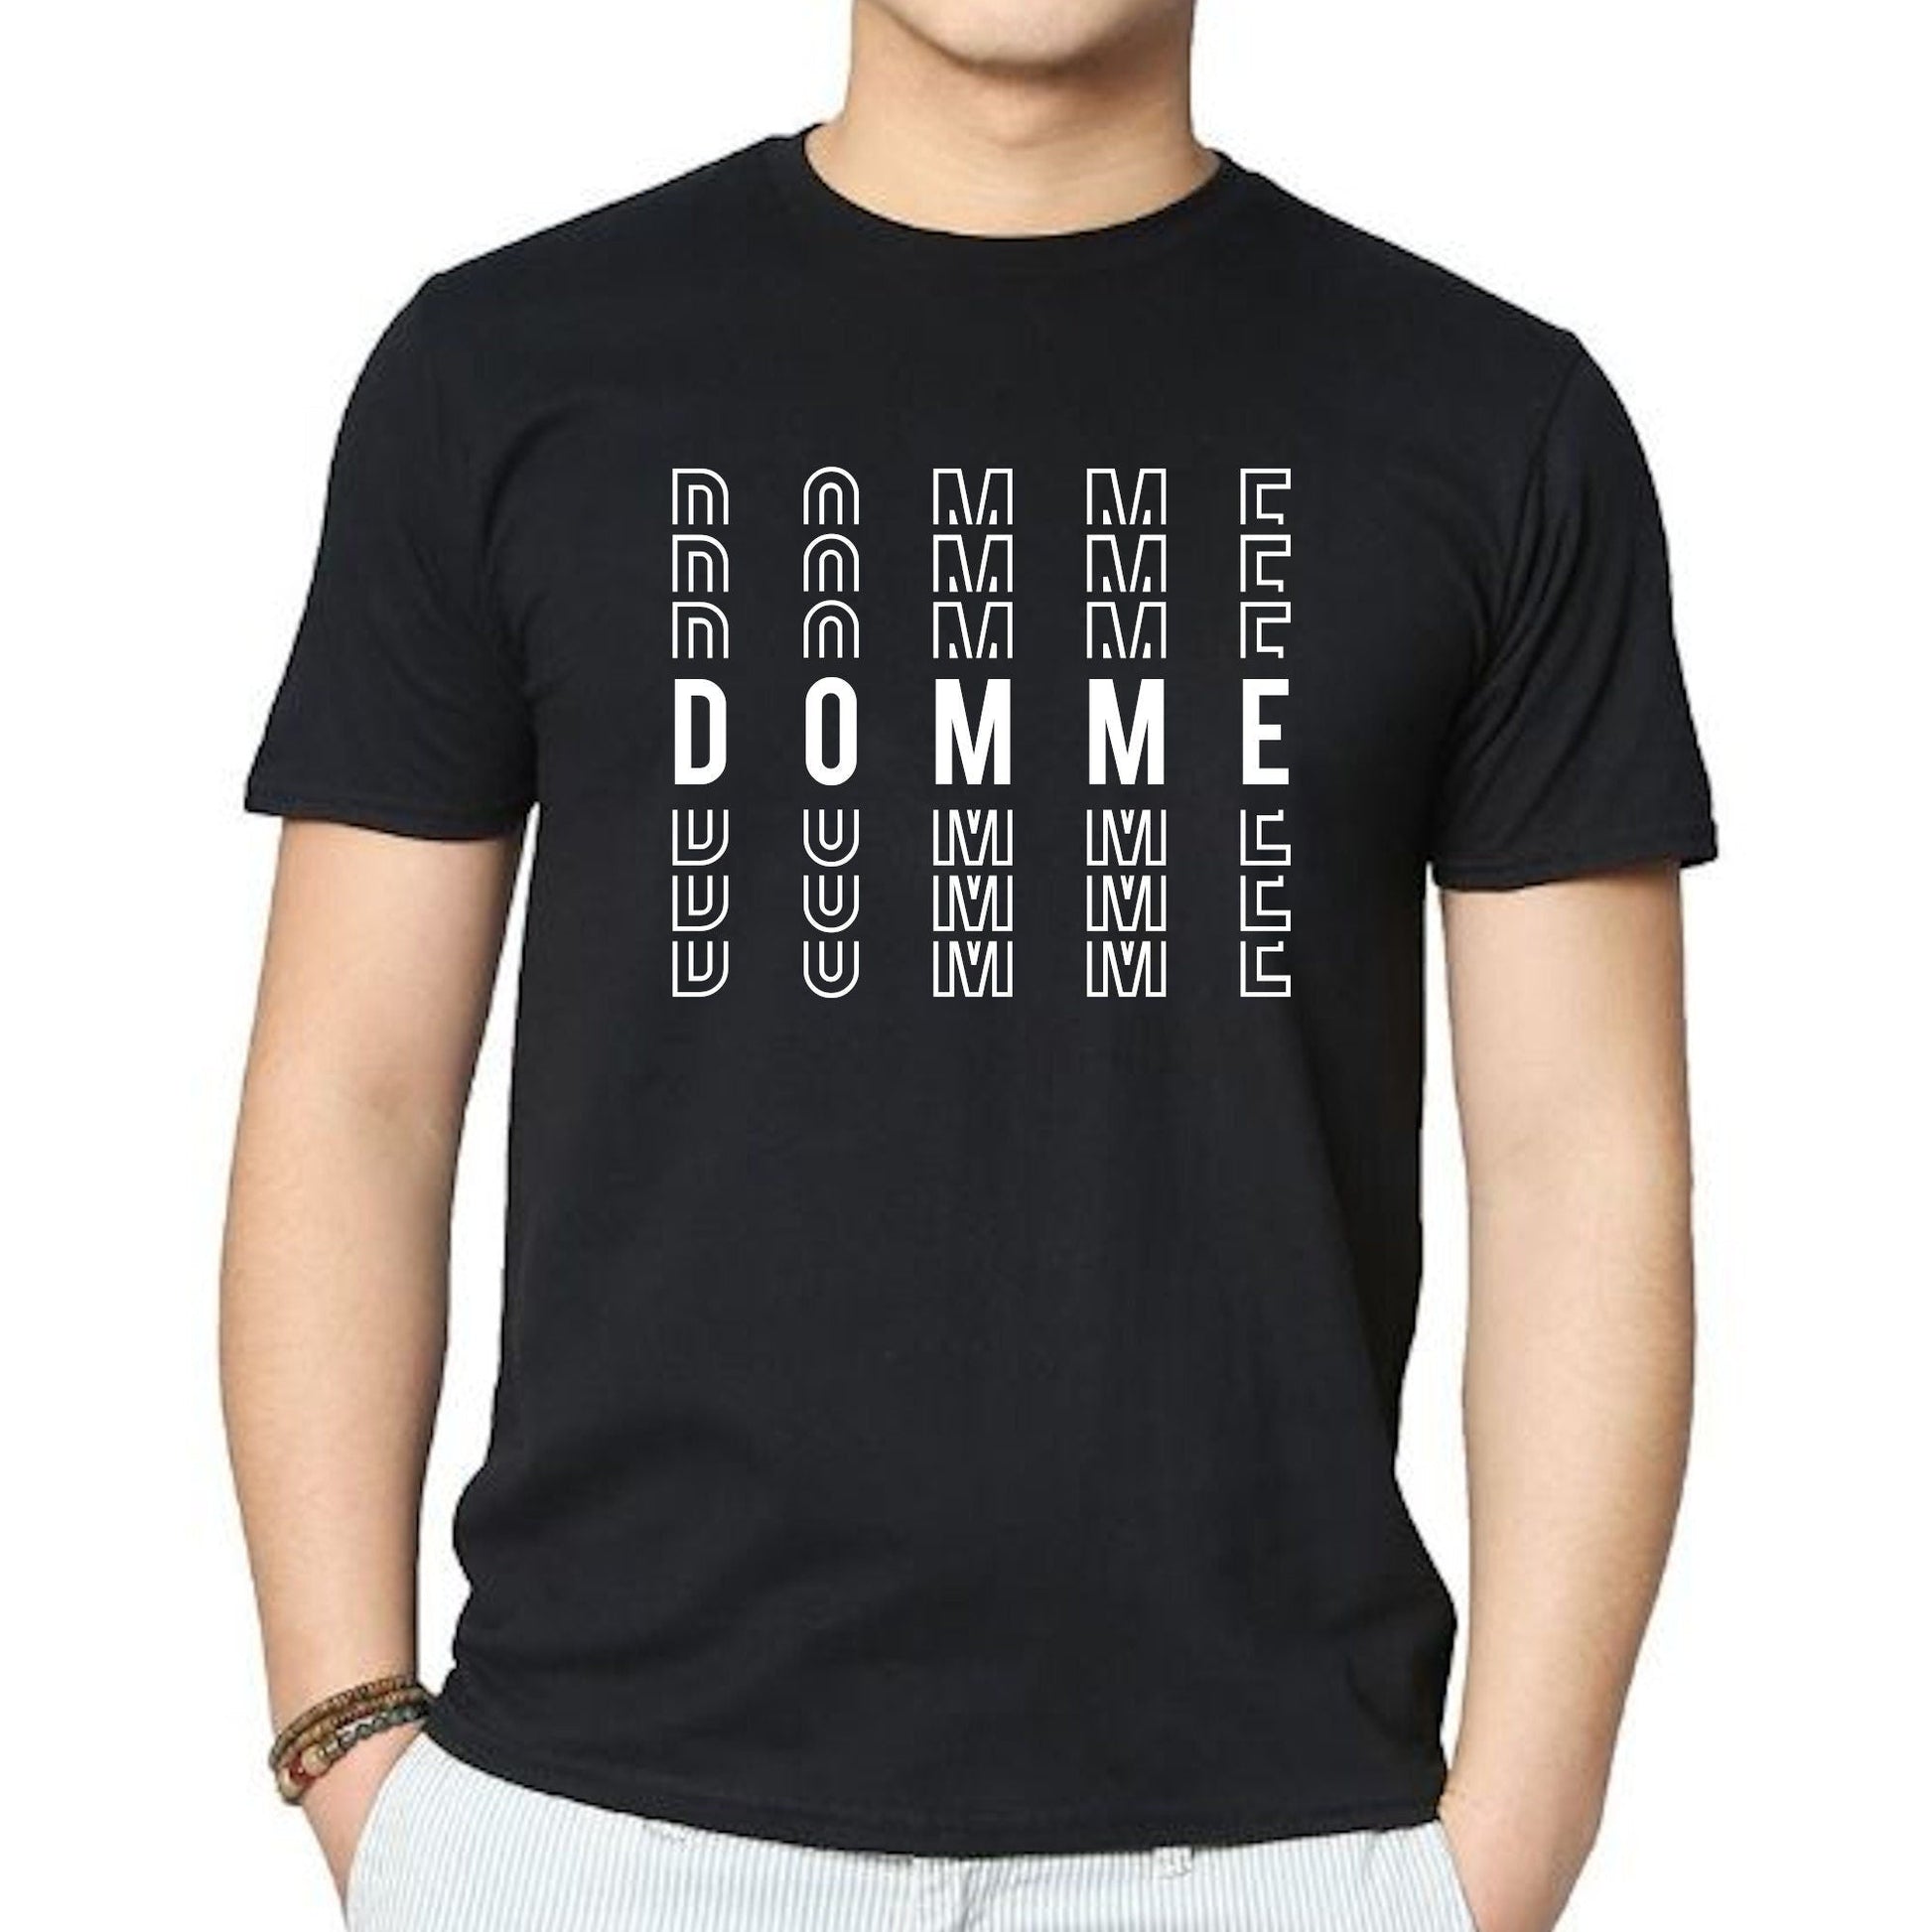 Domme BDSM Shirt